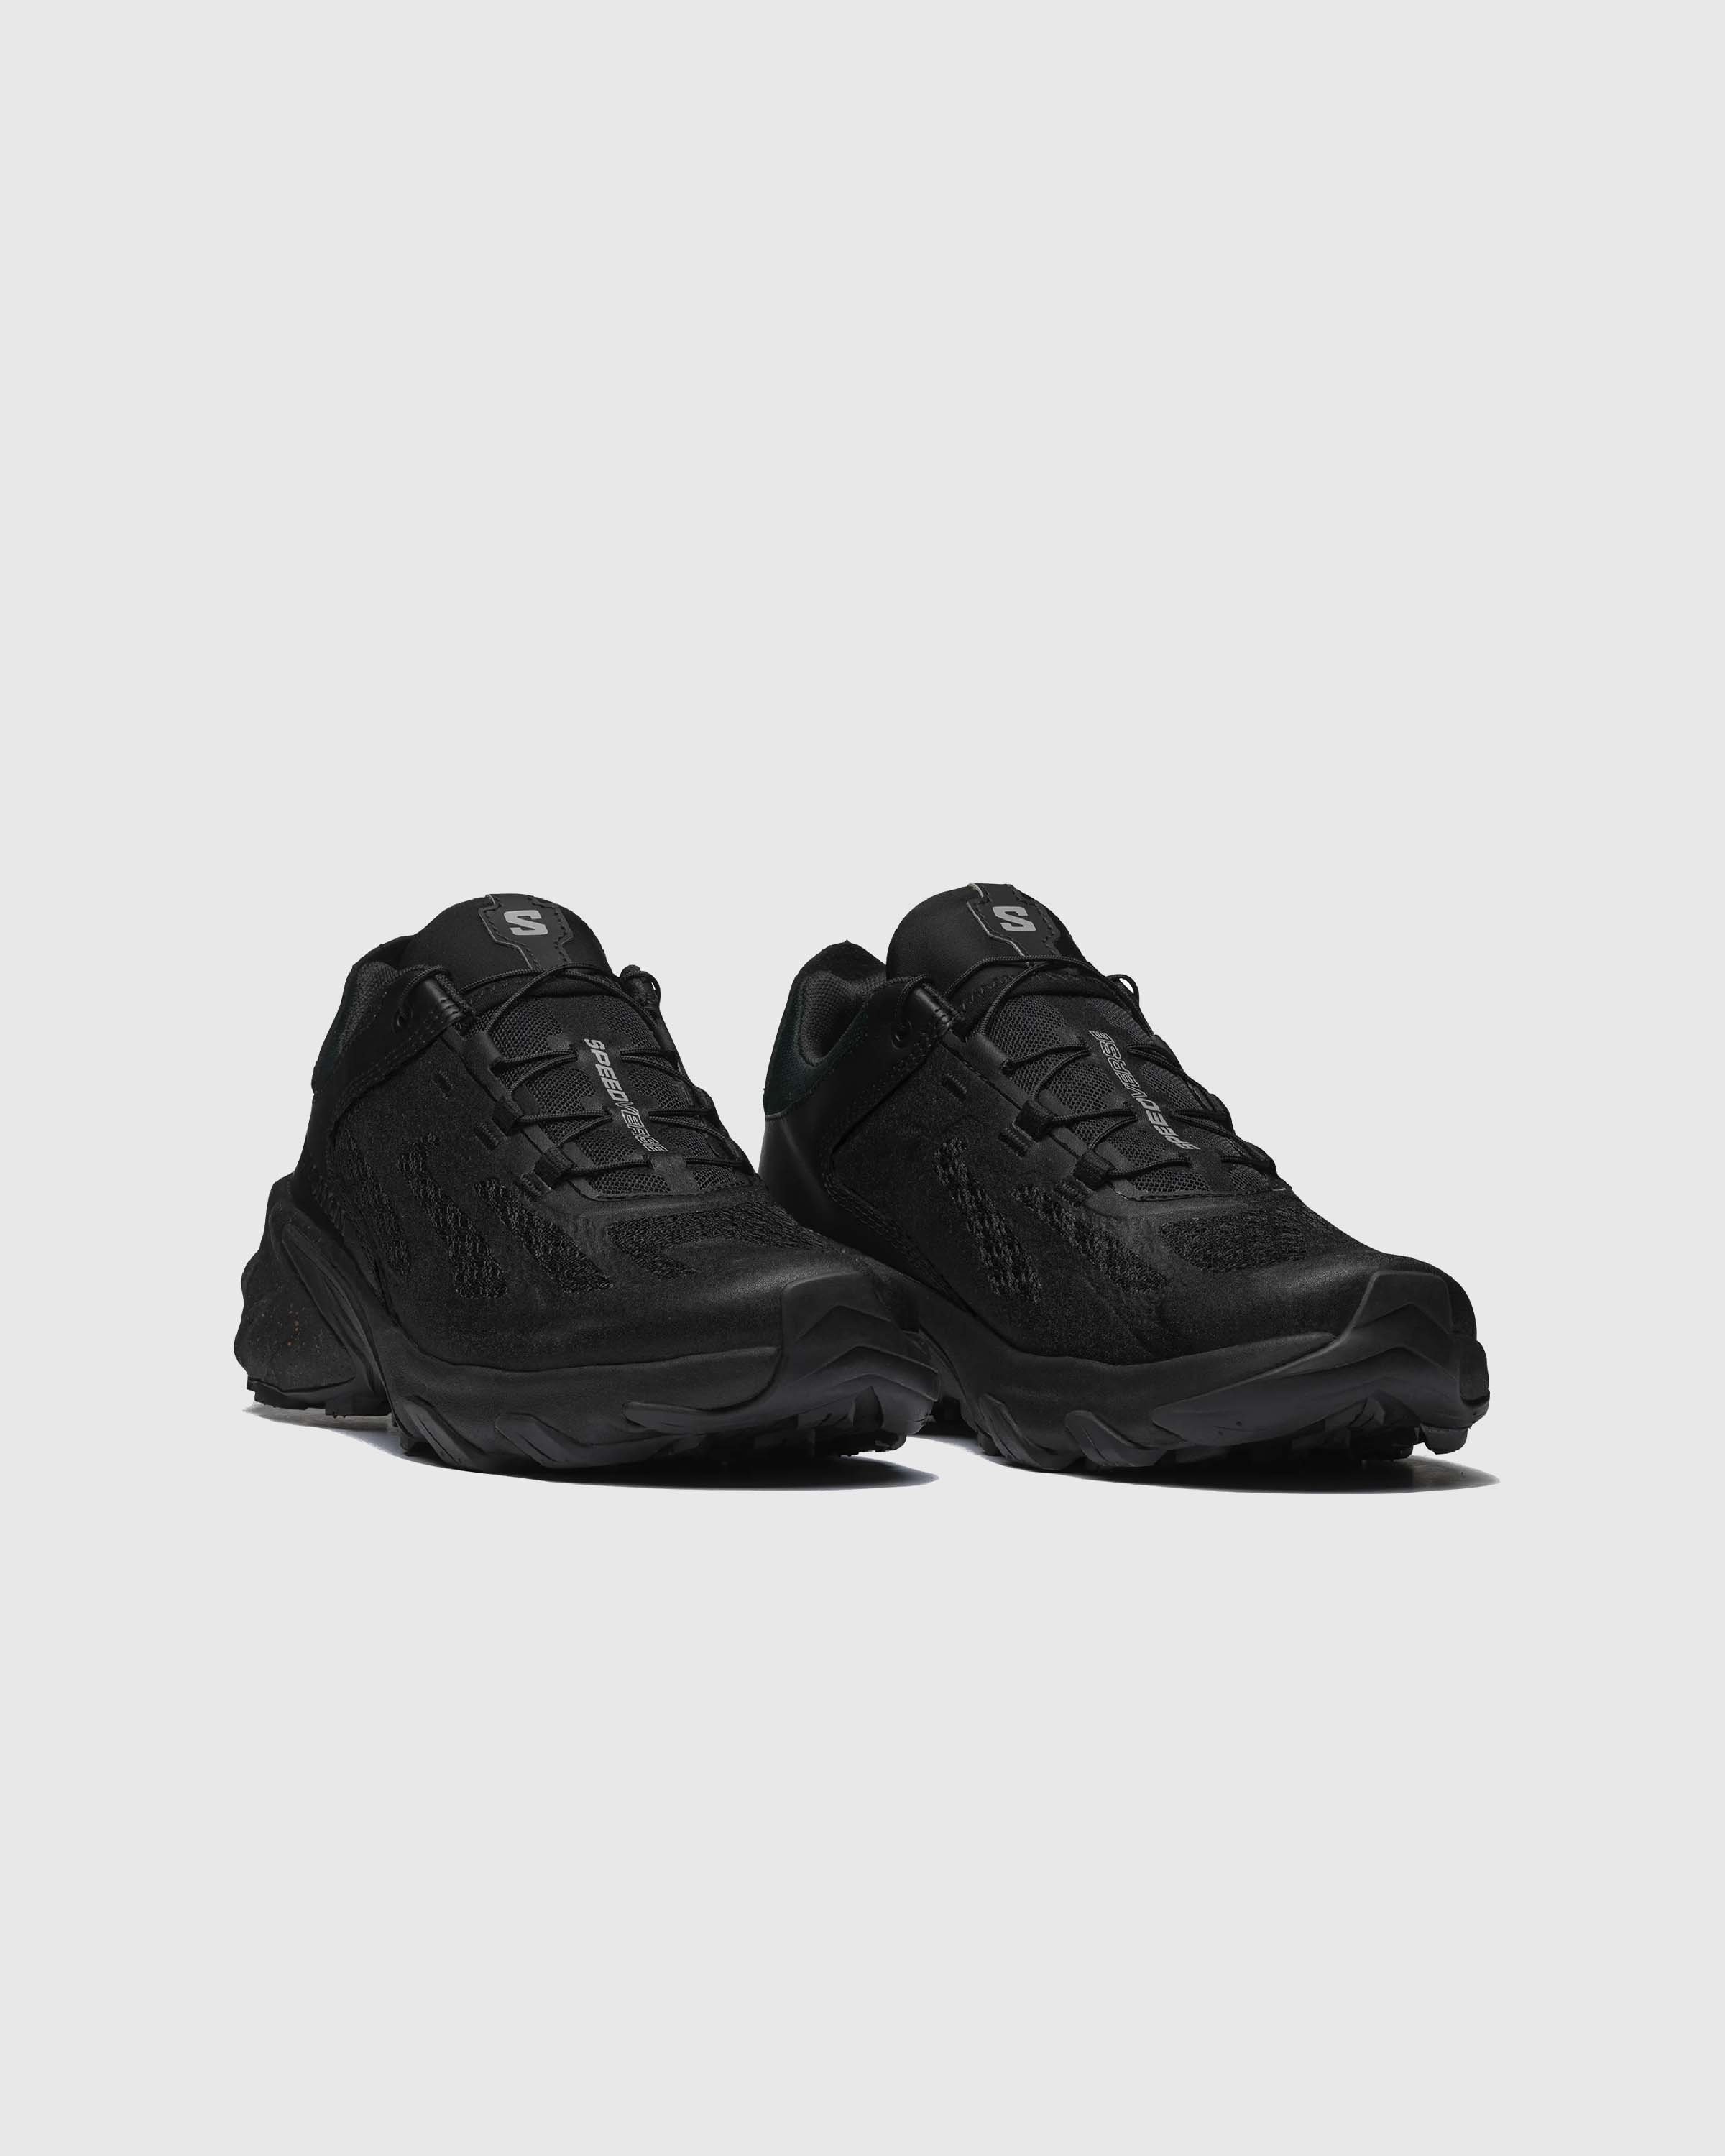 Salomon - Speedverse PRG Black/Alloy/Black - Footwear - Black - Image 2